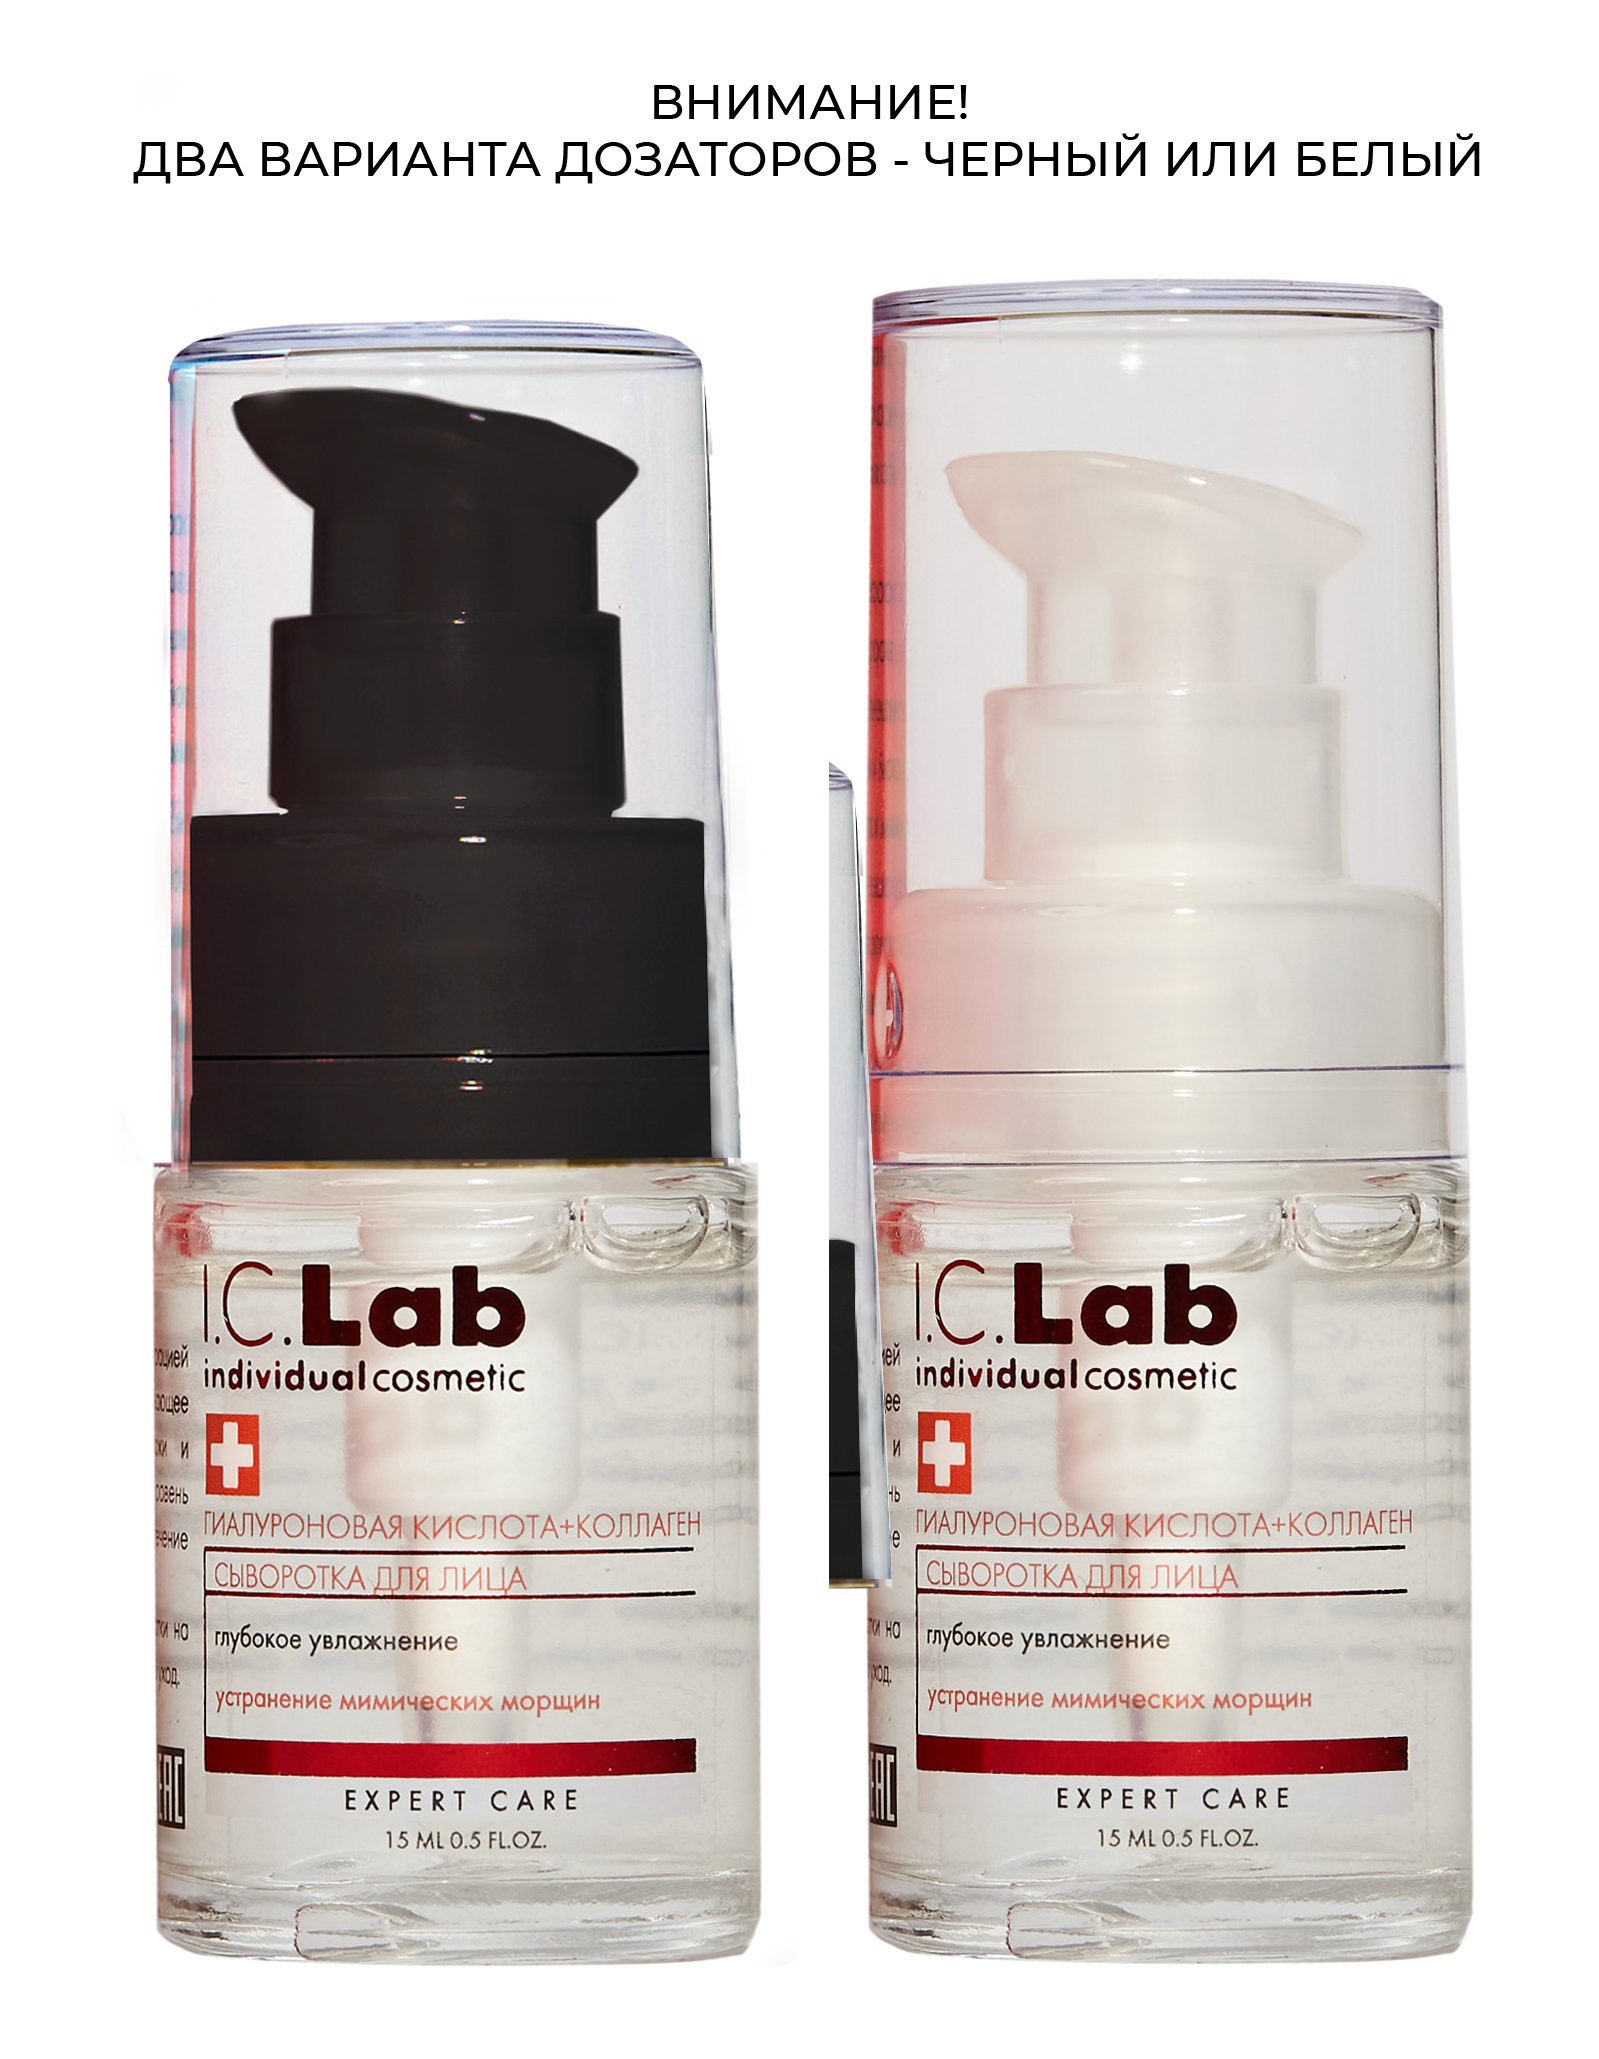 Сыворотка для лица I.C.Lab Individual cosmetic гиалуроновая + коллаген 15 мл - фото 3